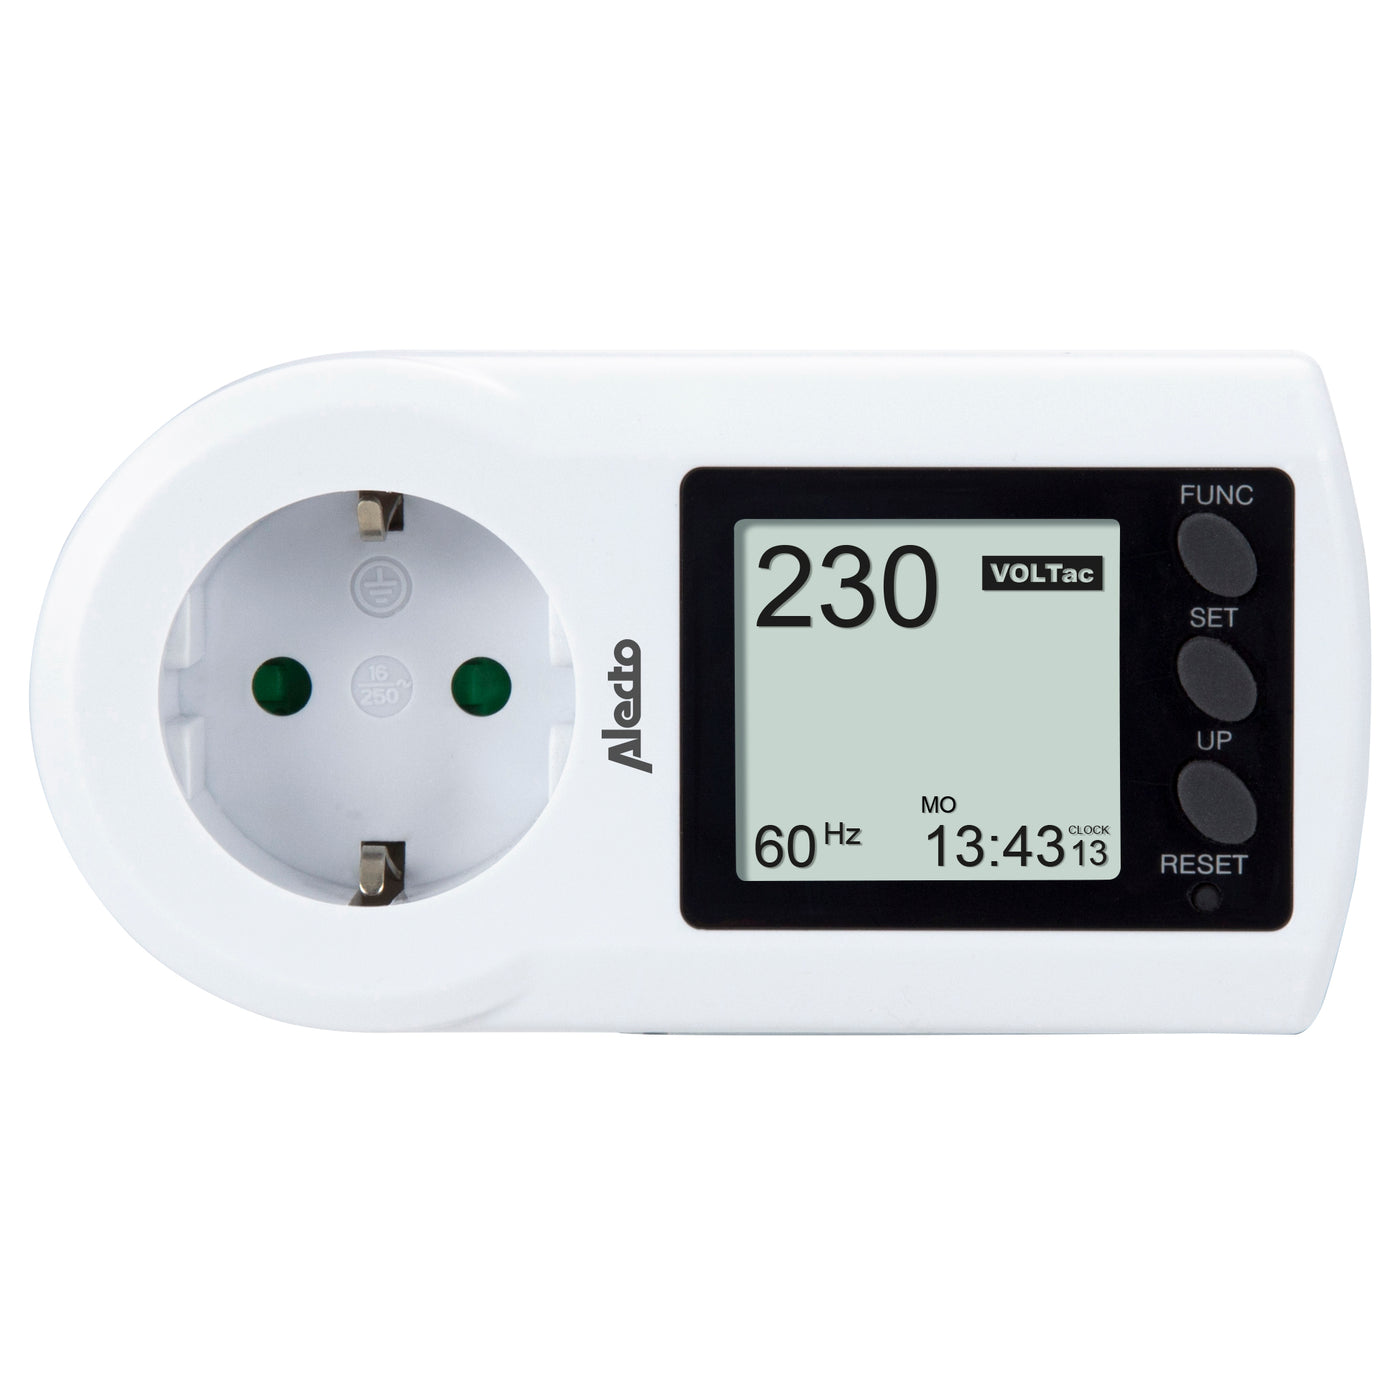 Alecto EM-17 - Energy usage monitor, white